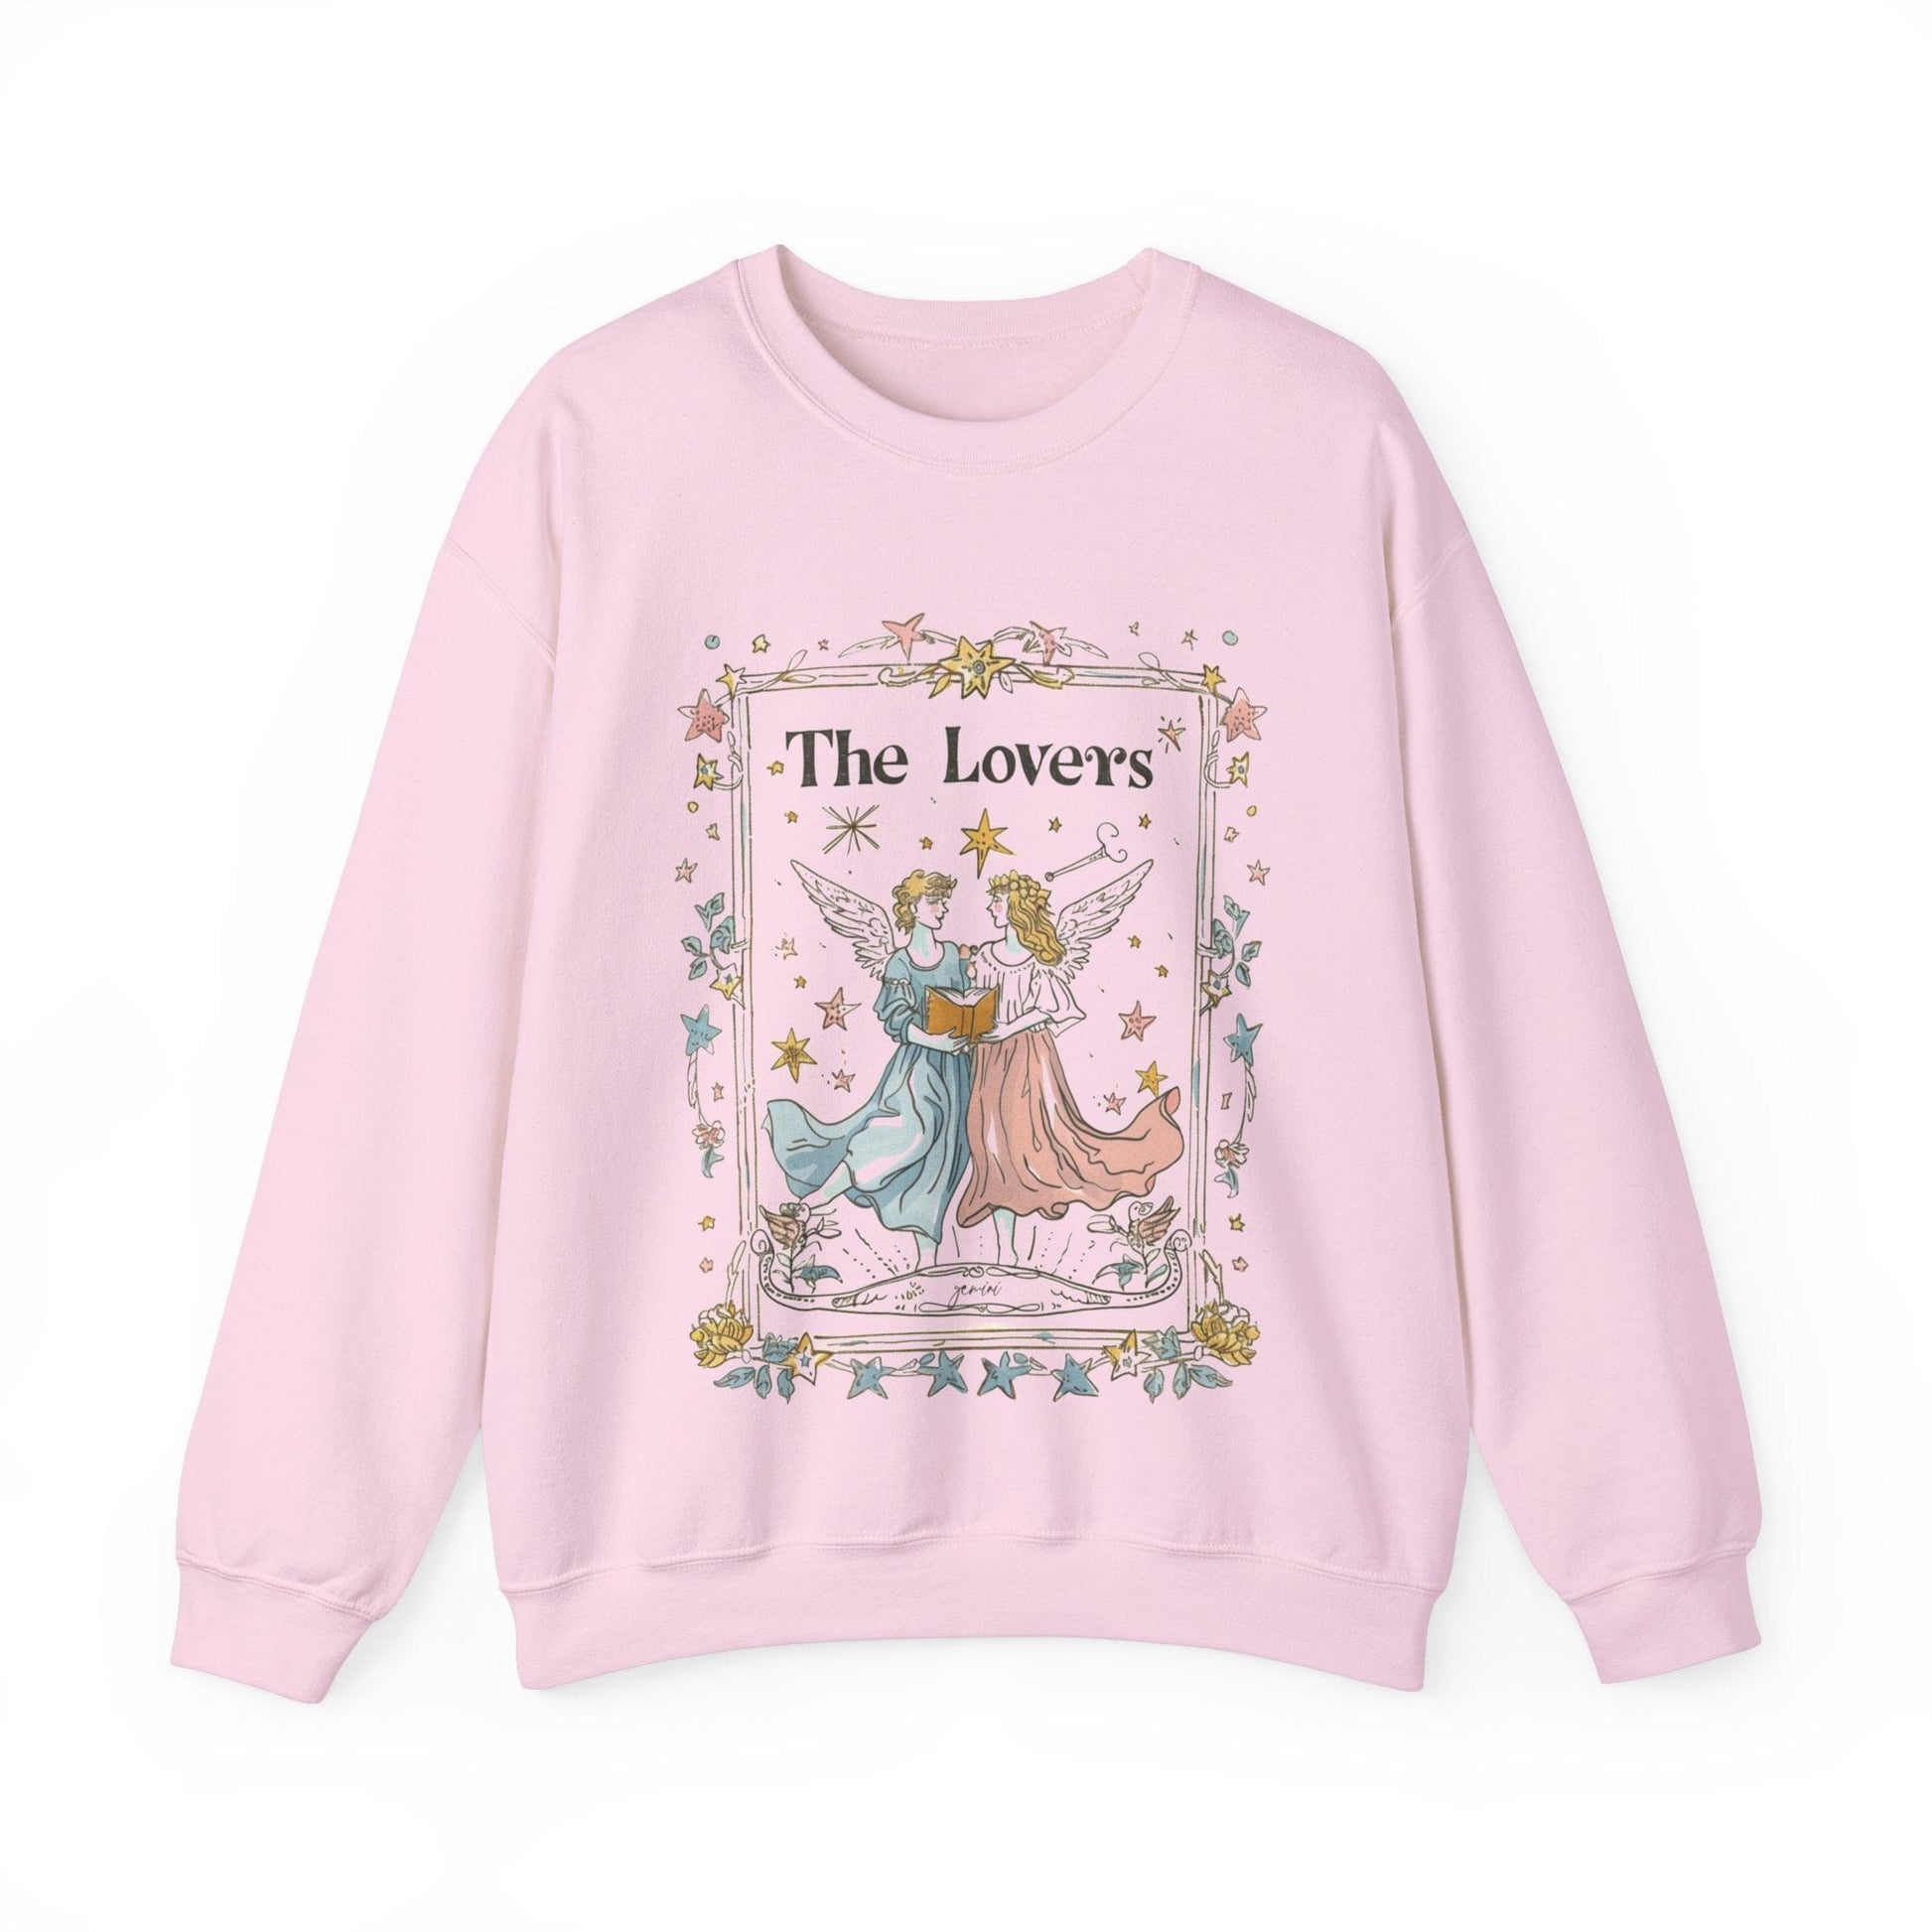 Sweatshirt S / Light Pink The Lovers Gemini Sweater